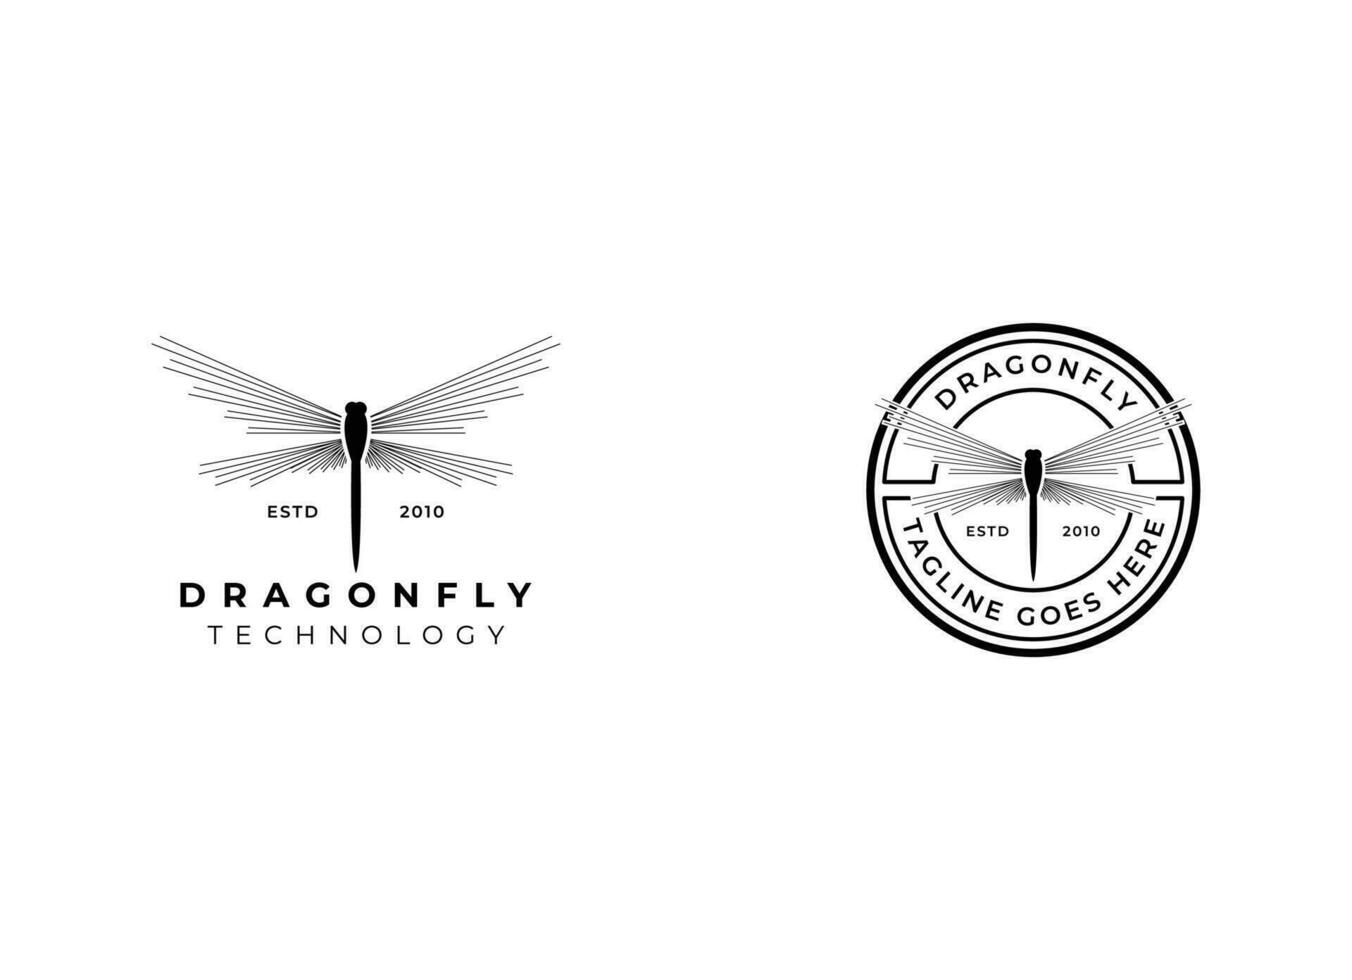 simples e minimalista libélula logotipo Projeto. esboço libélula logotipo vetor